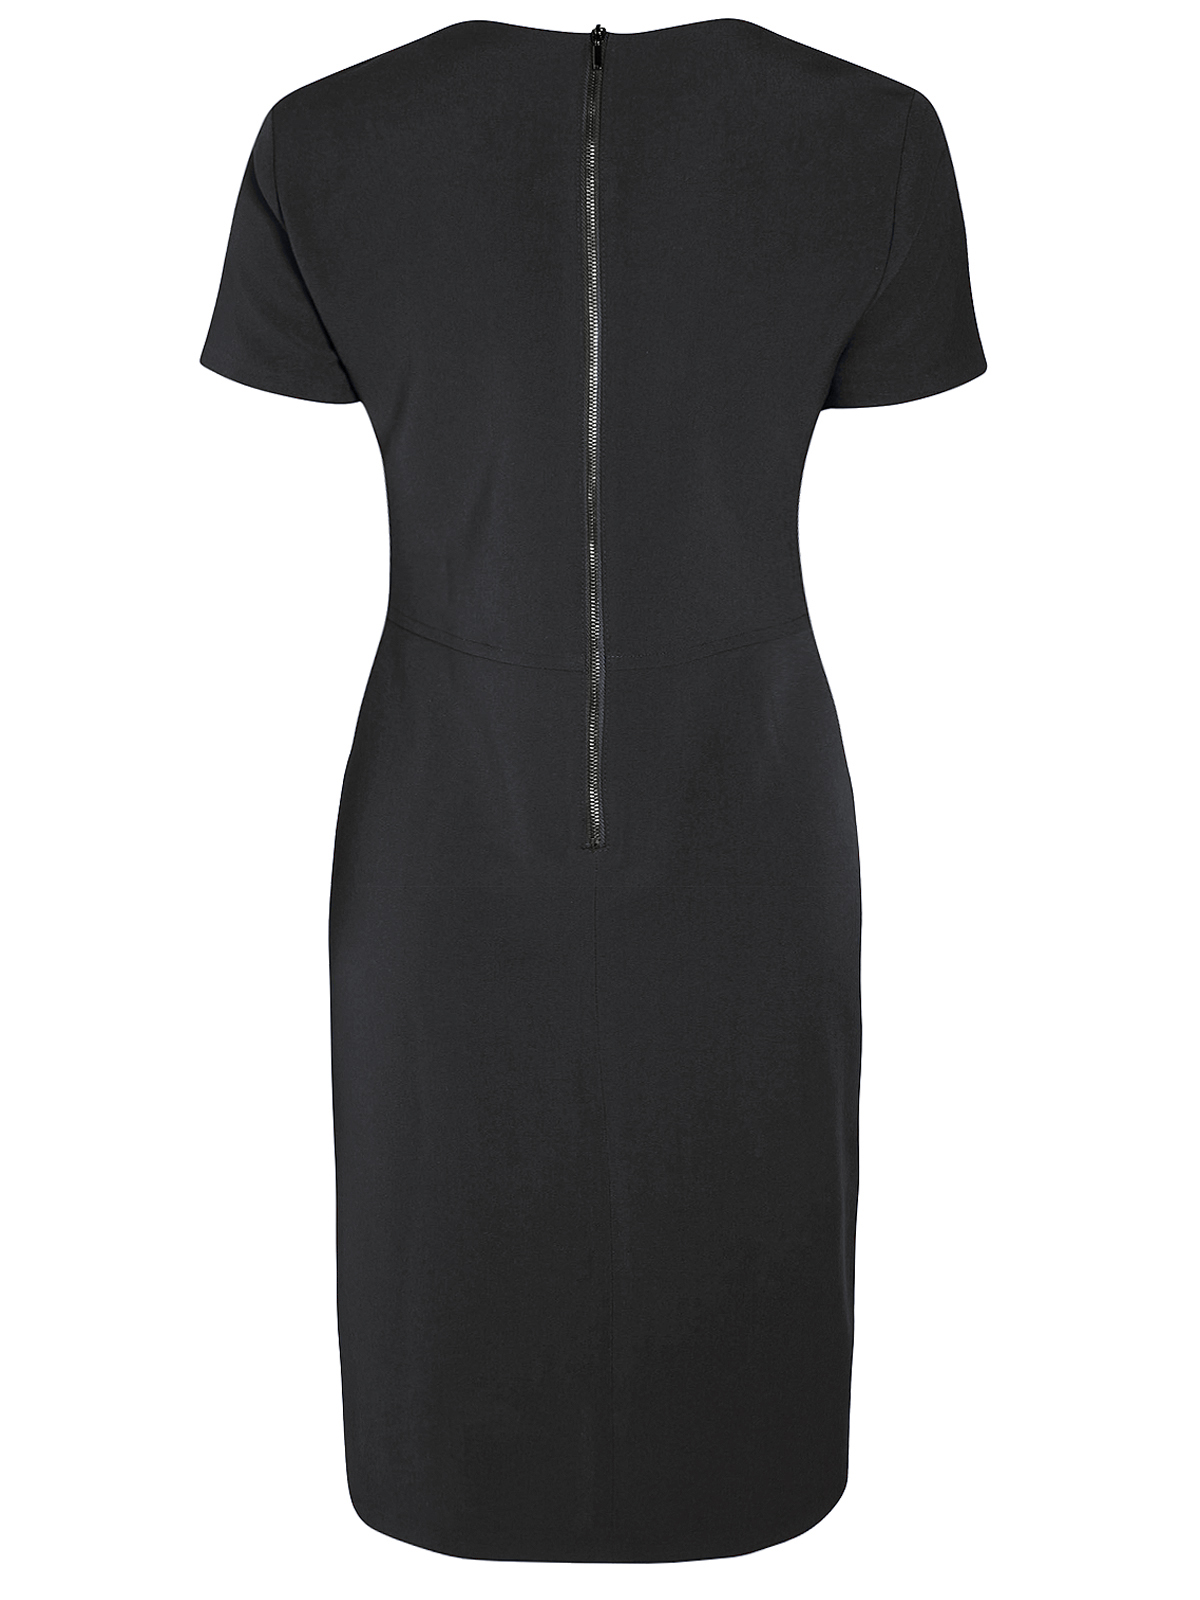 N3XT BLACK Zip Pocket Panelled Shift Dress - Size 8 to 22